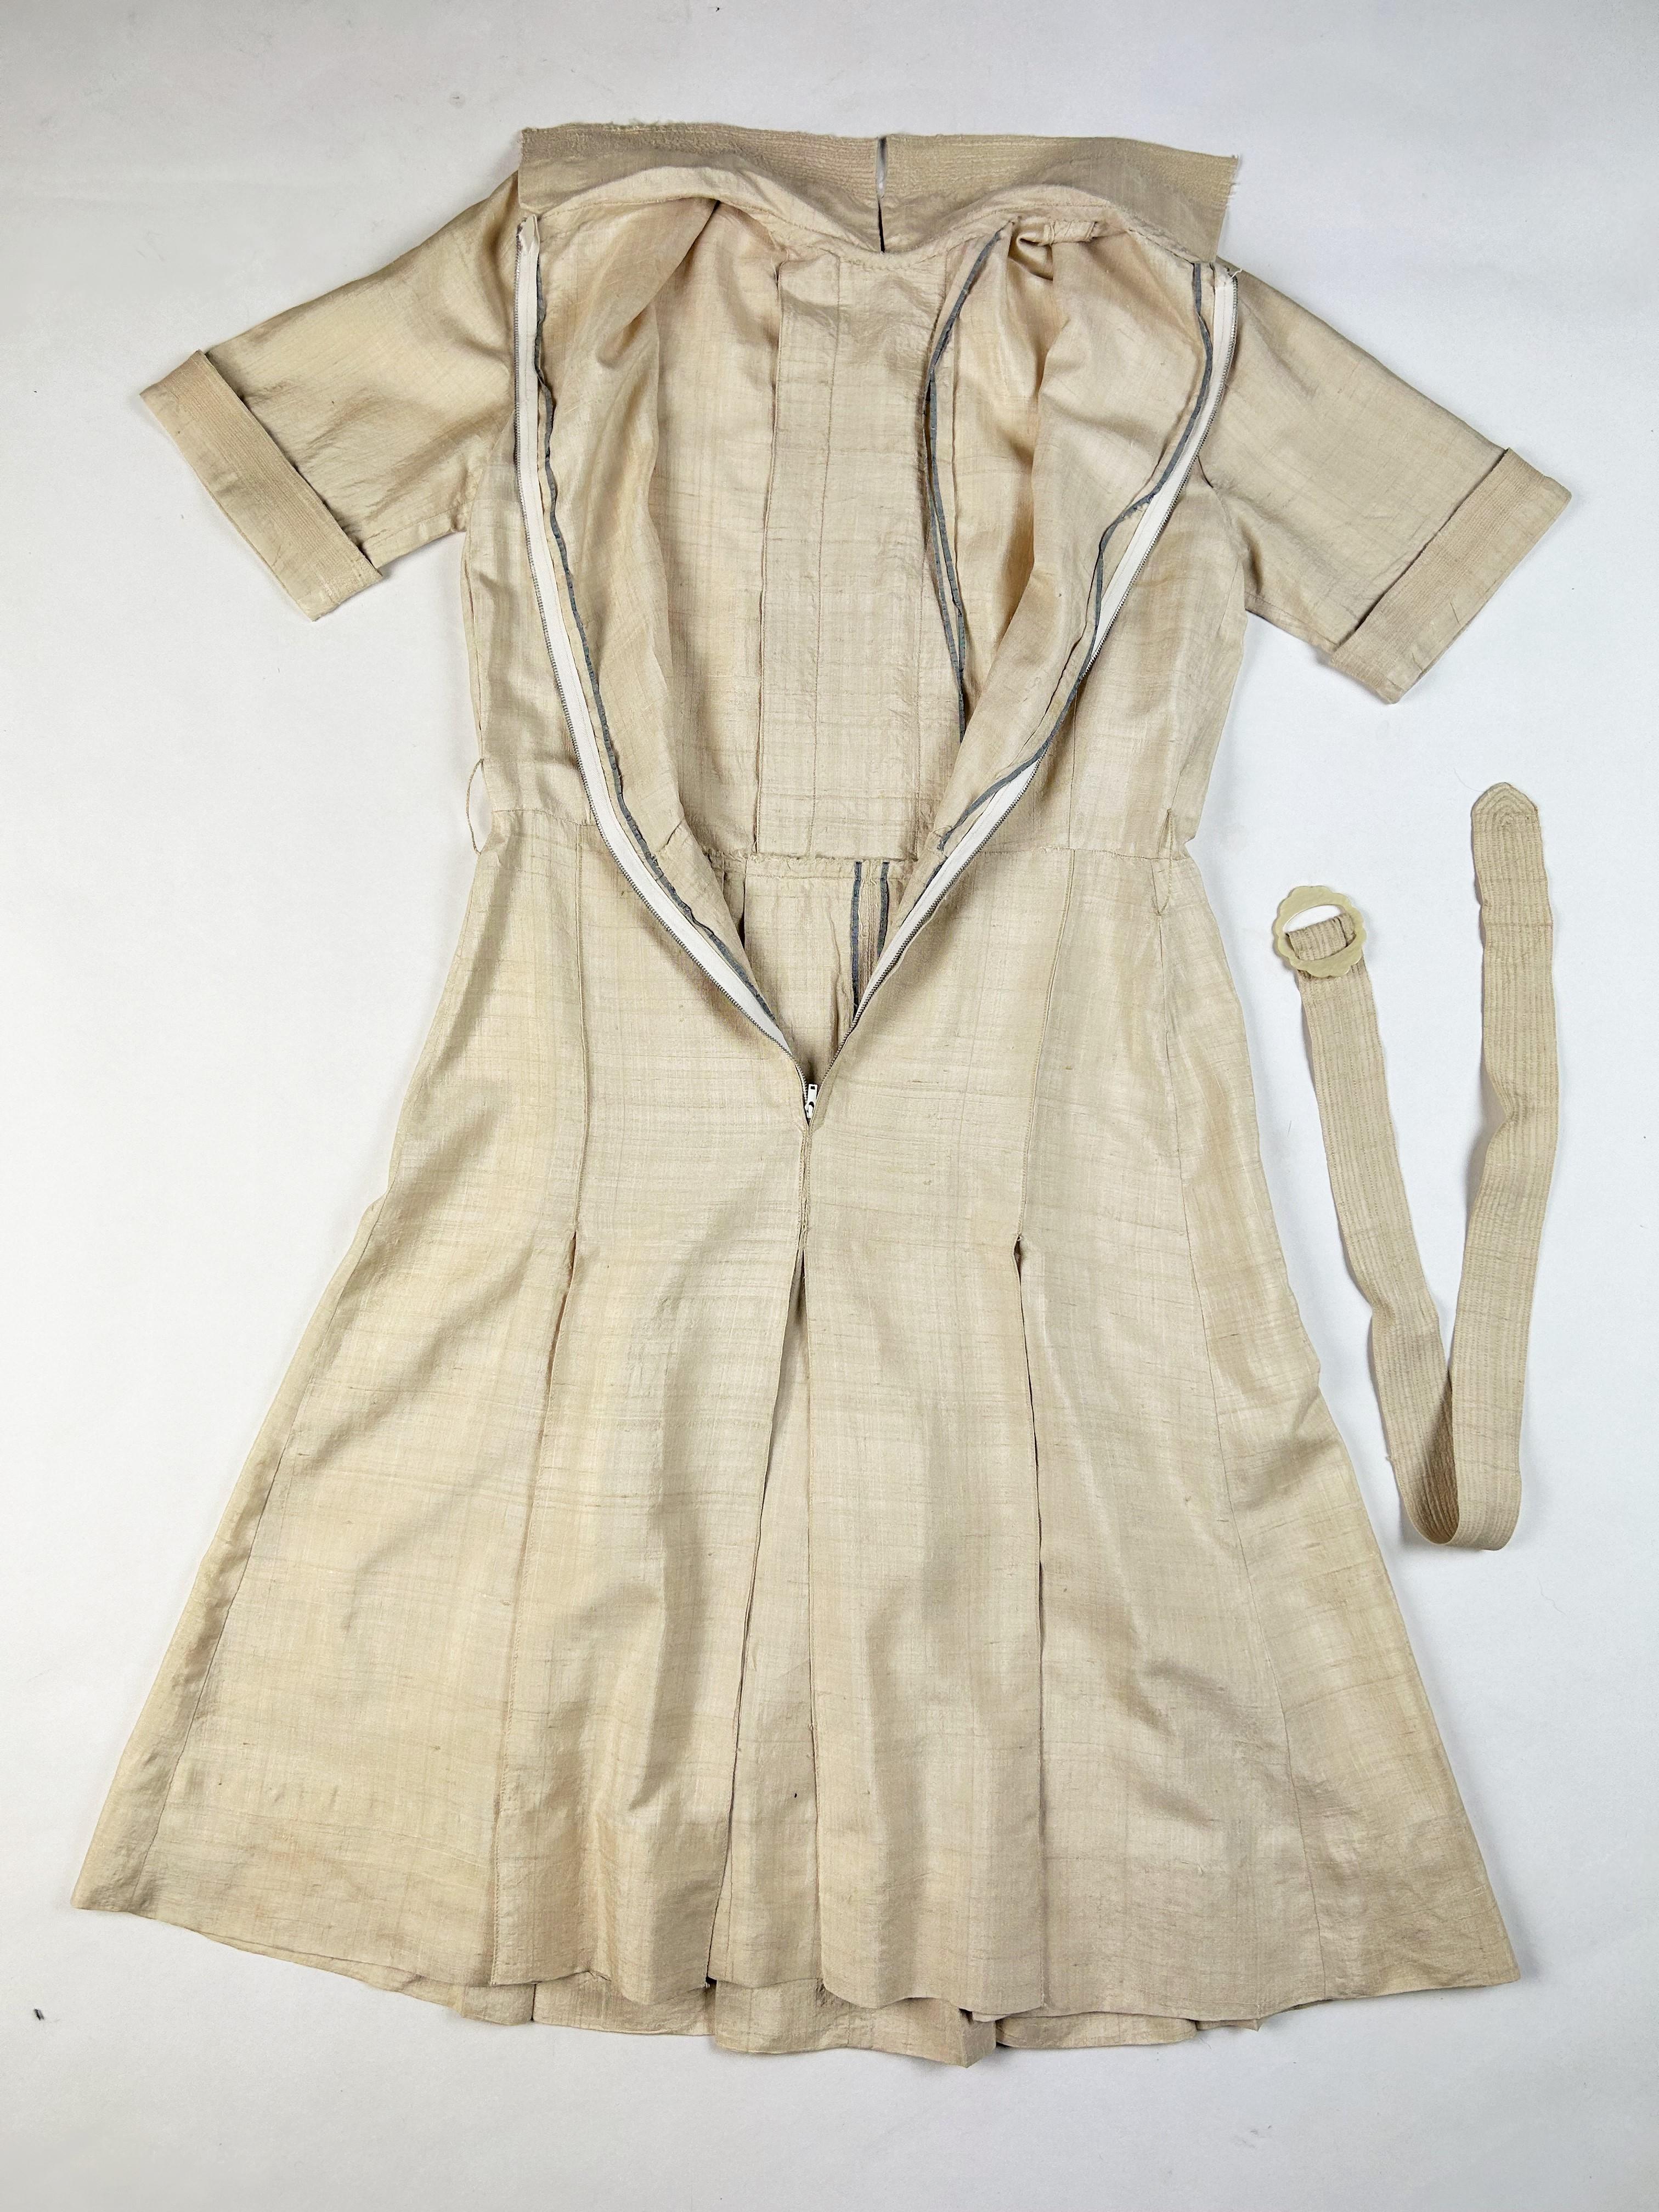 Unbleached wild silk summer dress - France Circa 1930-1940 For Sale 8